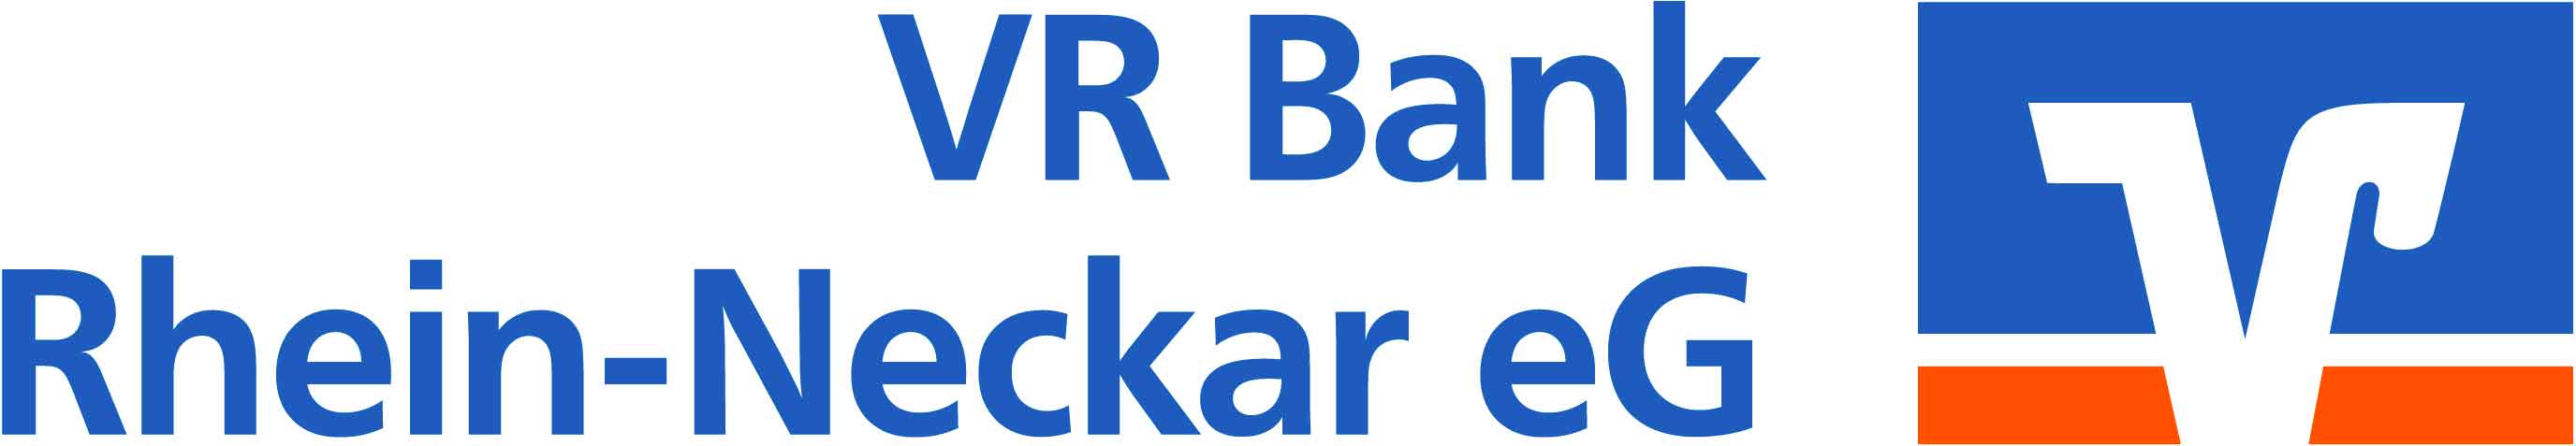 VR-Bank-Logo